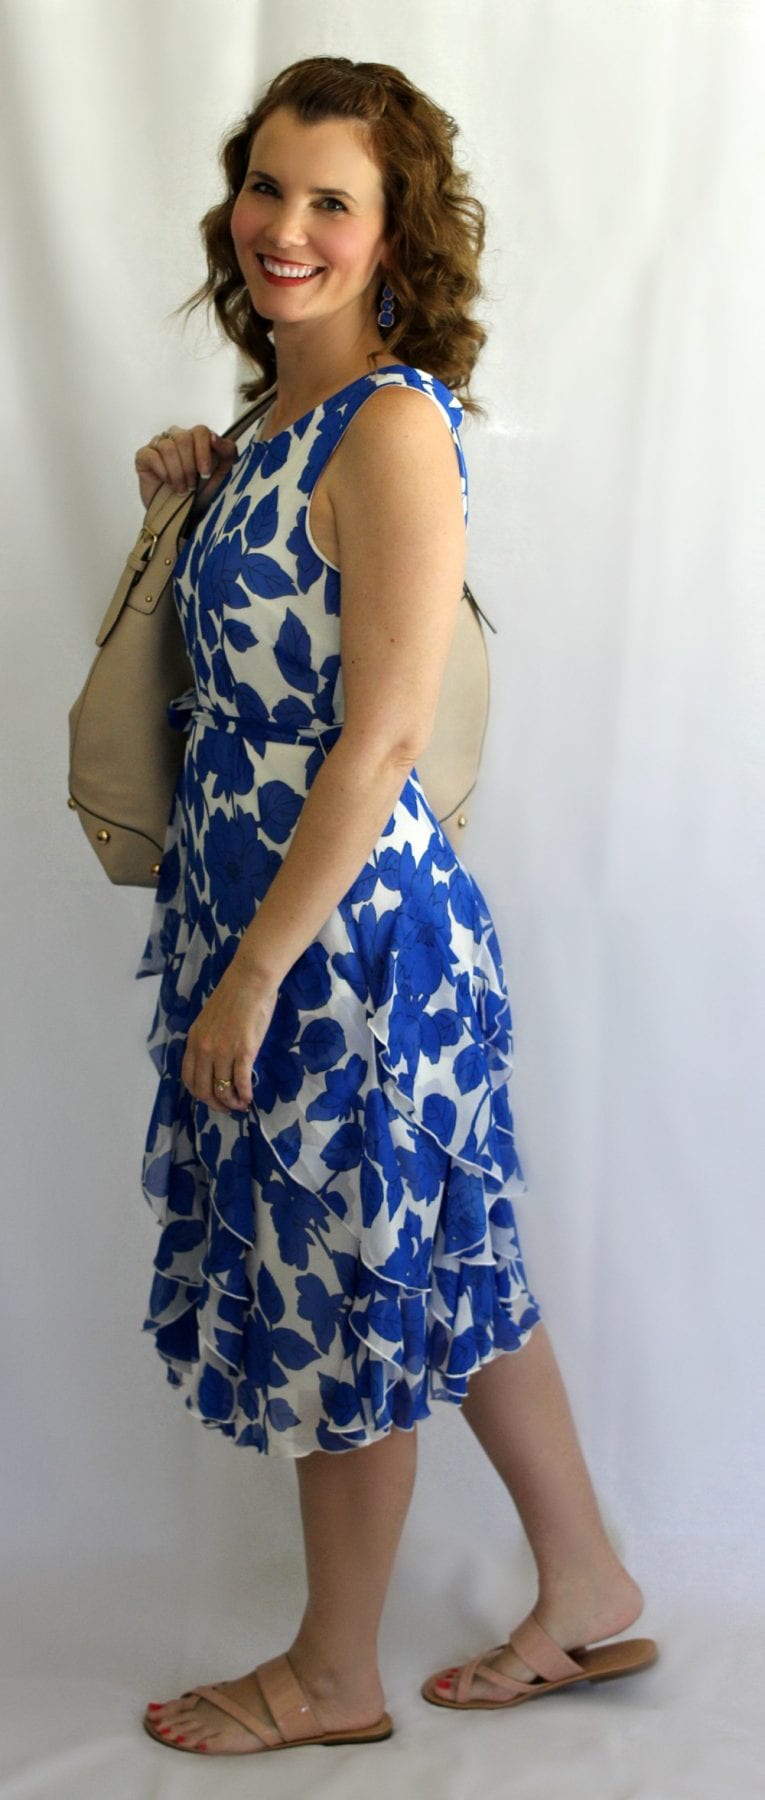 Summer Dress: Royal Blue Floral Print Corkscrew Dress from Chadwicks.